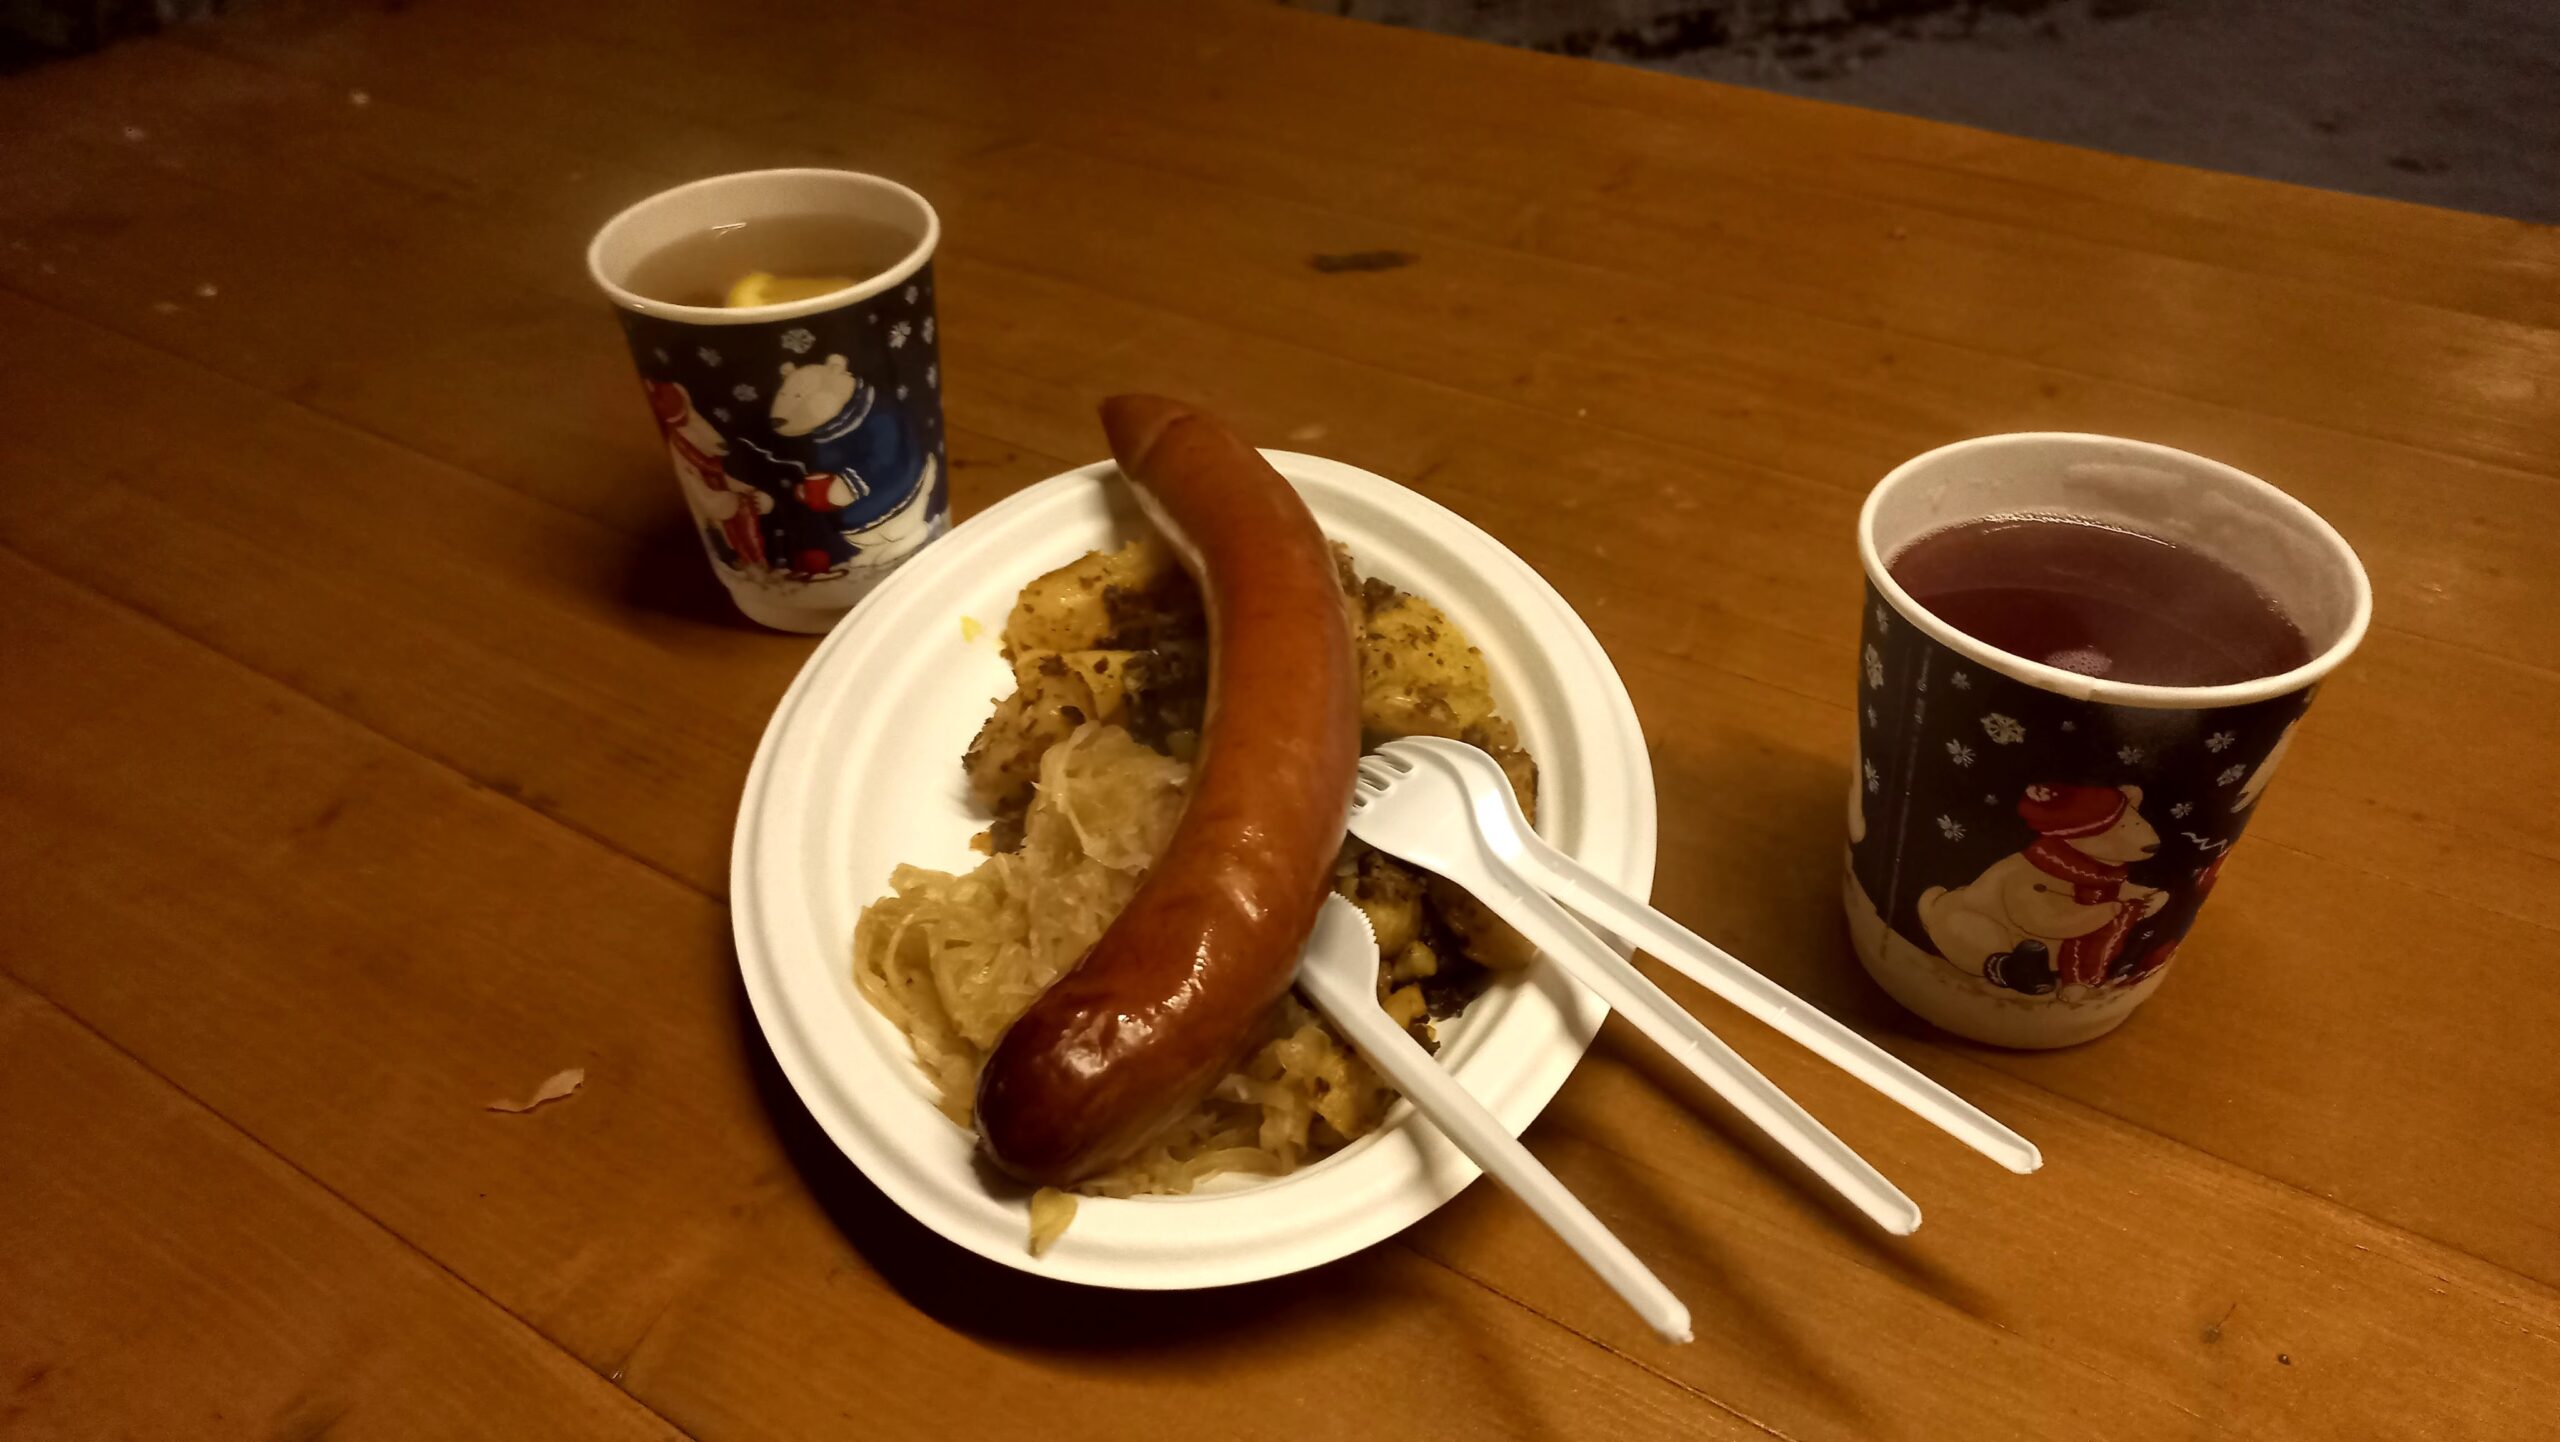 Elk sausage with sauerkraut and glögi